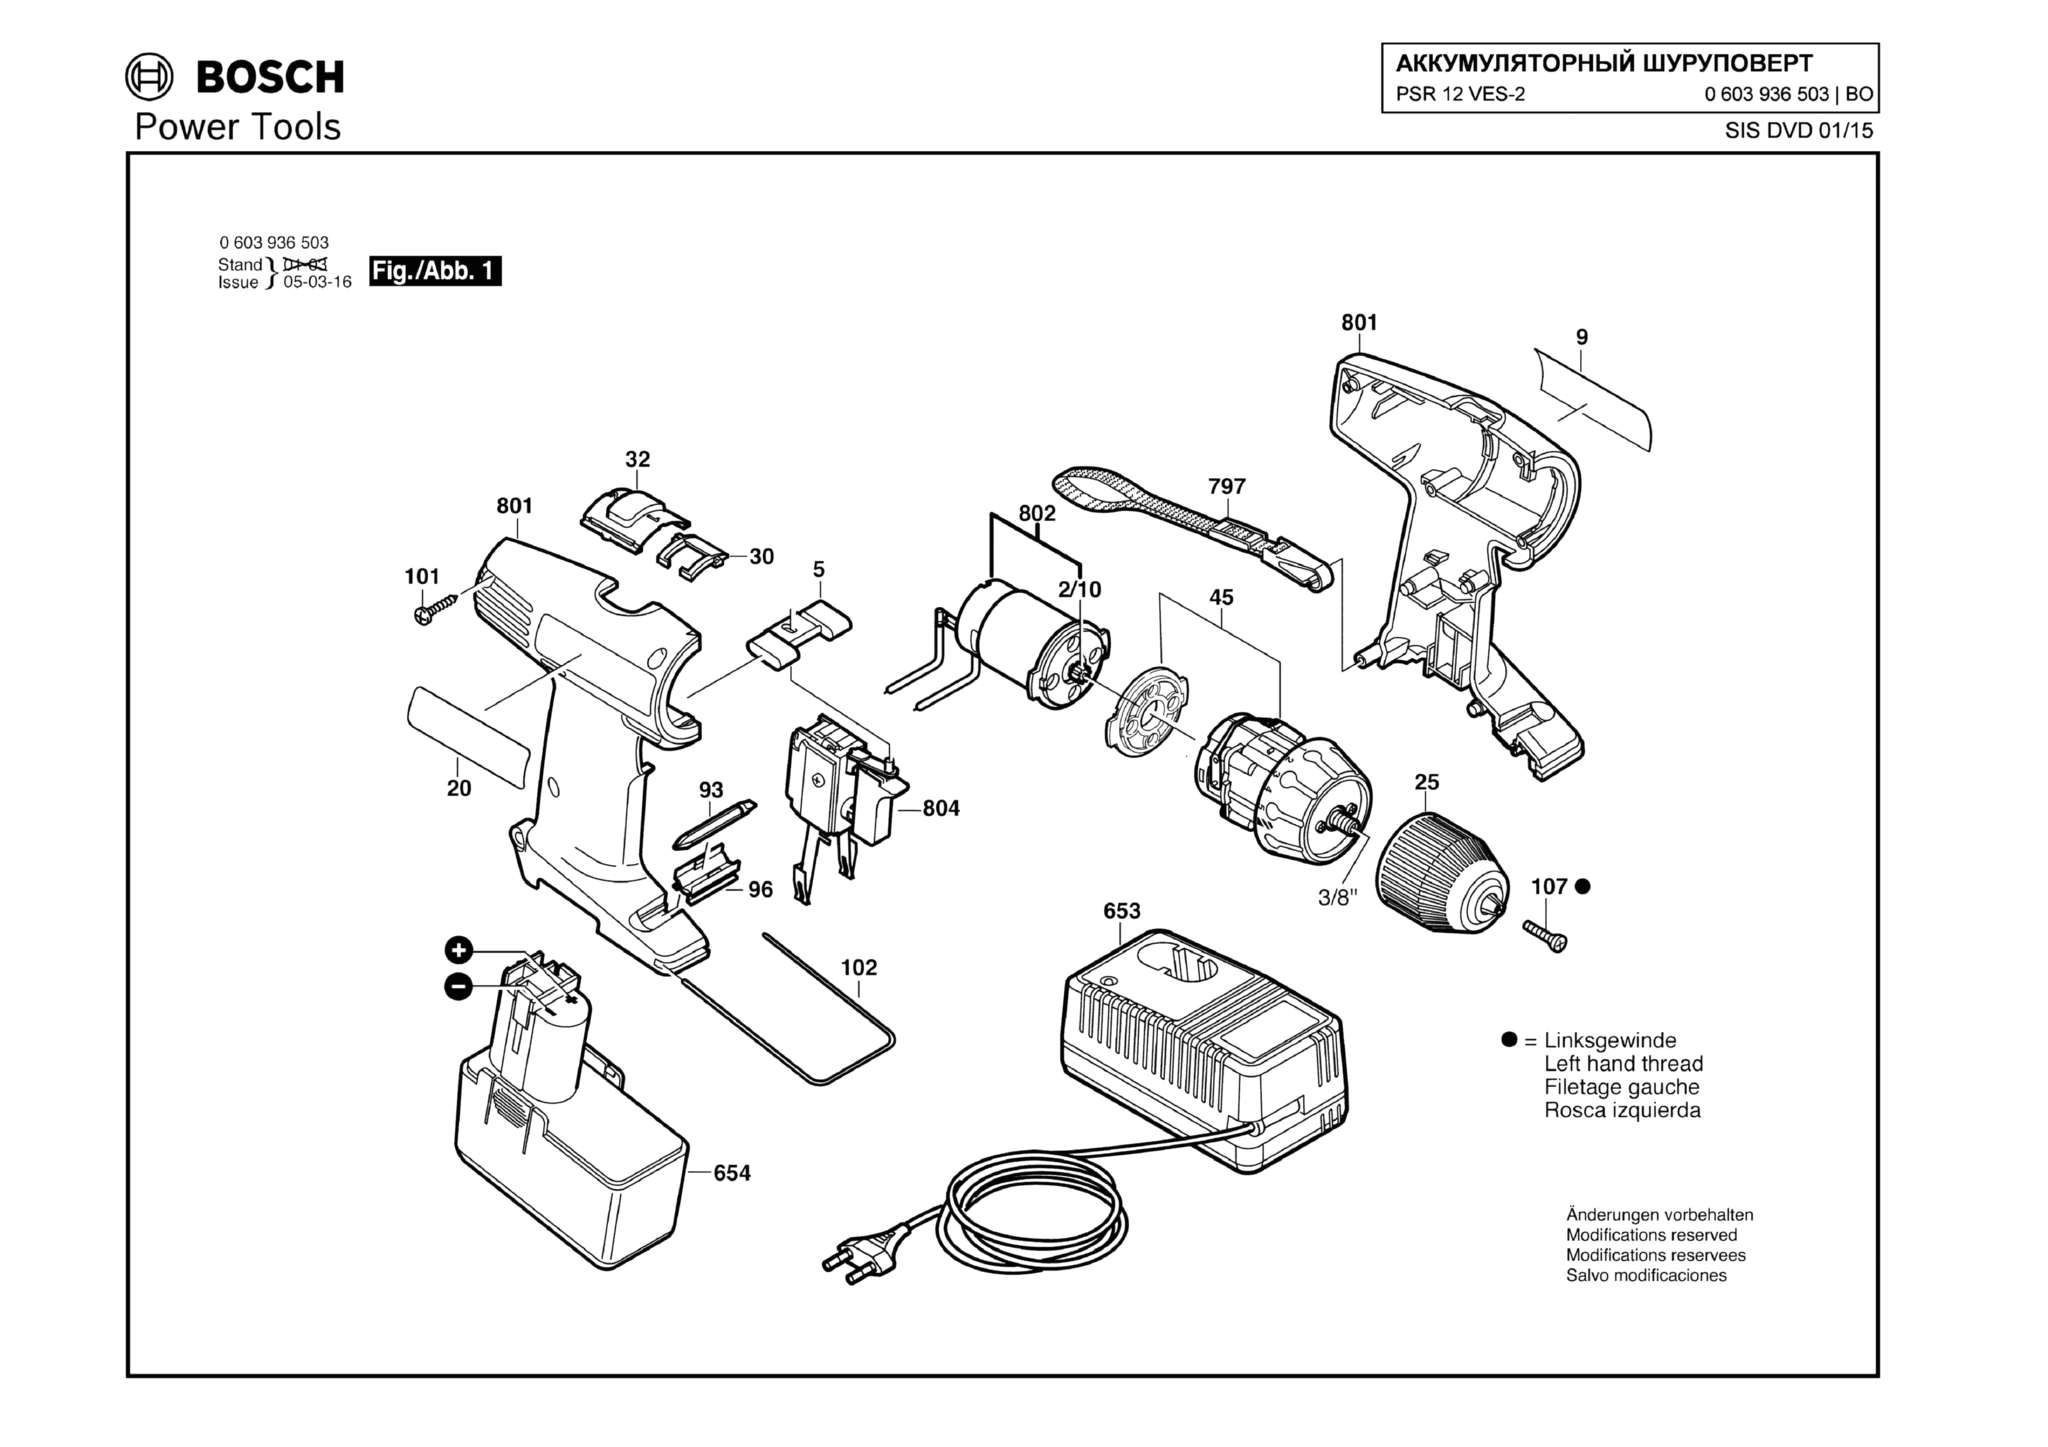 Запчасти, схема и деталировка Bosch PSR 12 VES-2 (ТИП 0603936503)